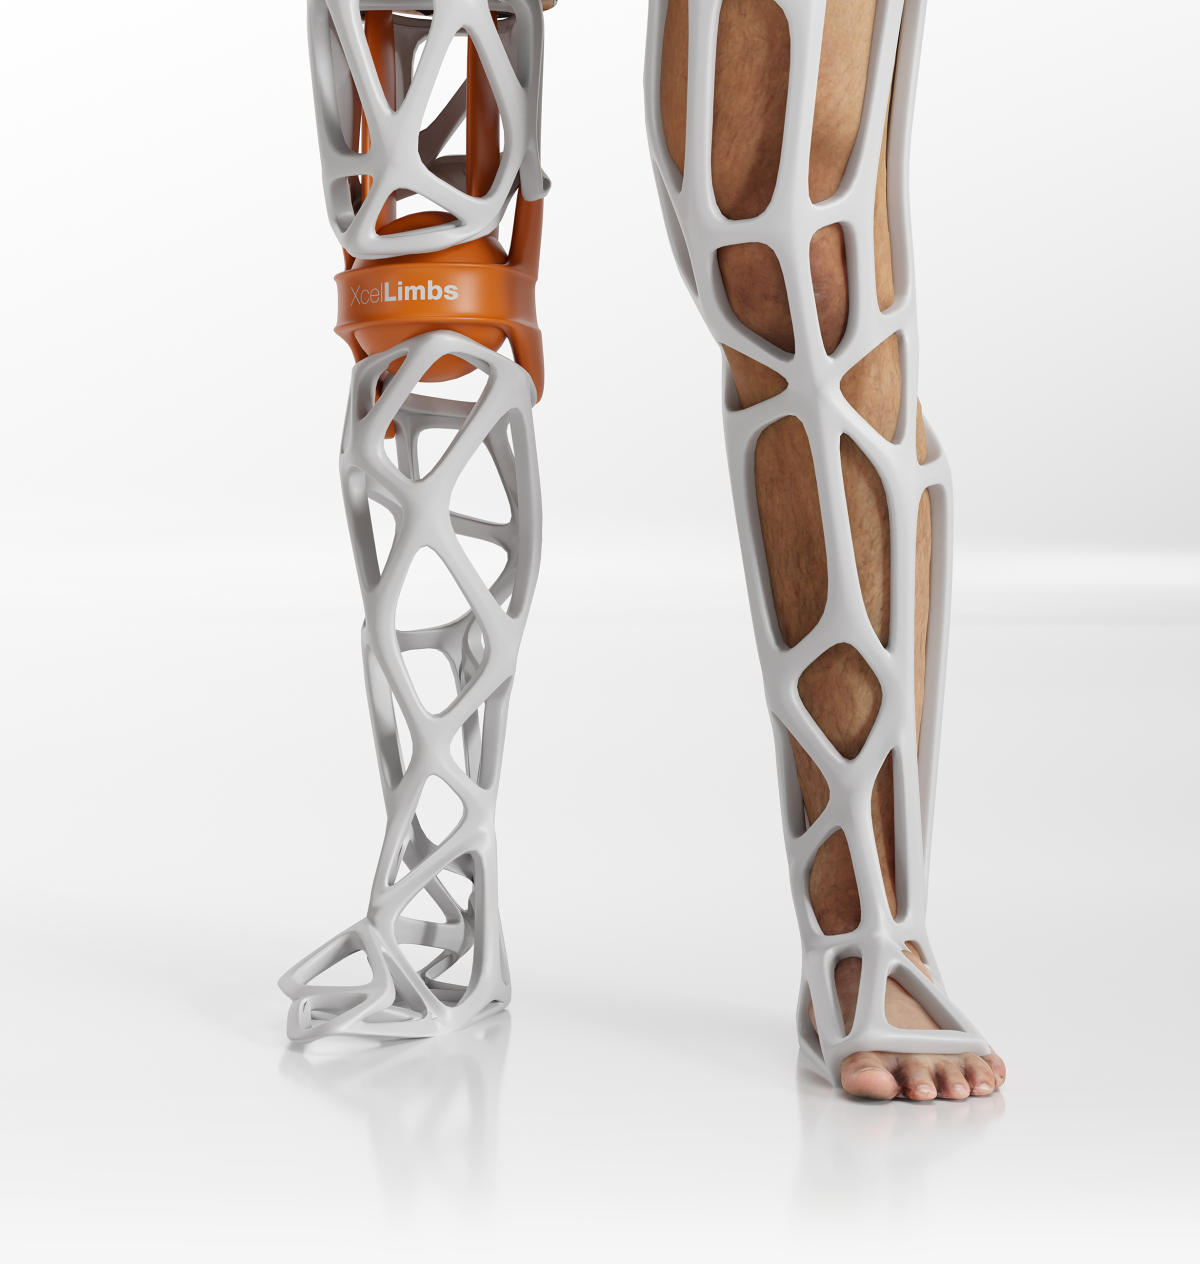 Digital rendering of prosthetic